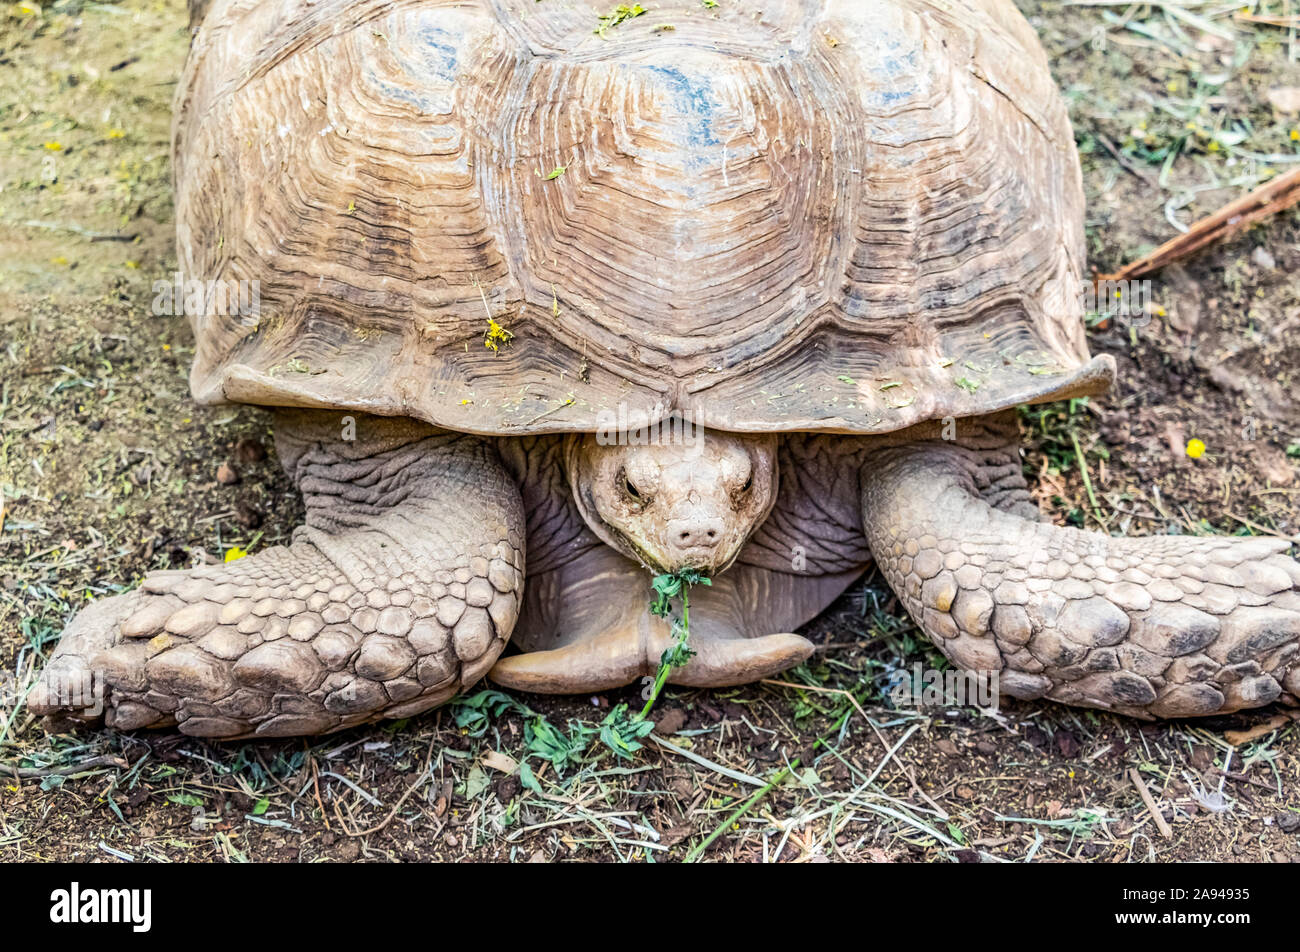 Turtle on the ground eating a plant; Al Huqnah, Khartoum, Sudan Stock Photo